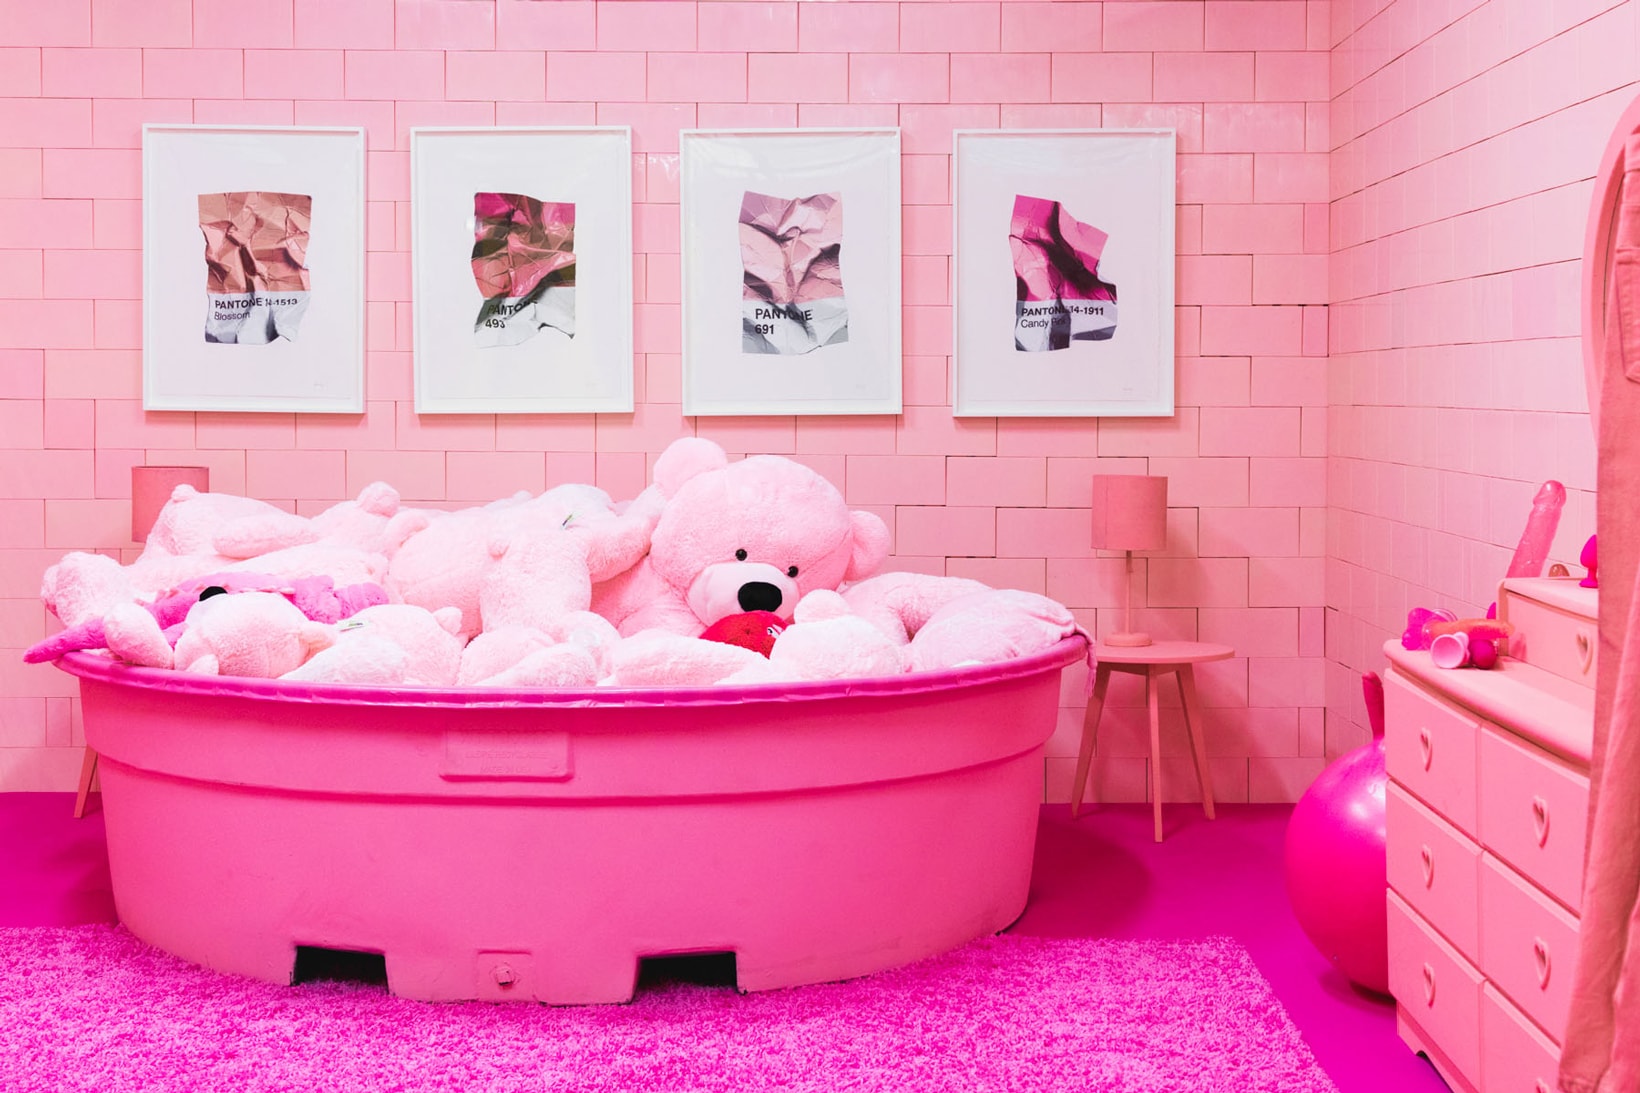 CJ Hendry Monochrome Greenpoint Brooklyn Exhibit Pink Bedroom